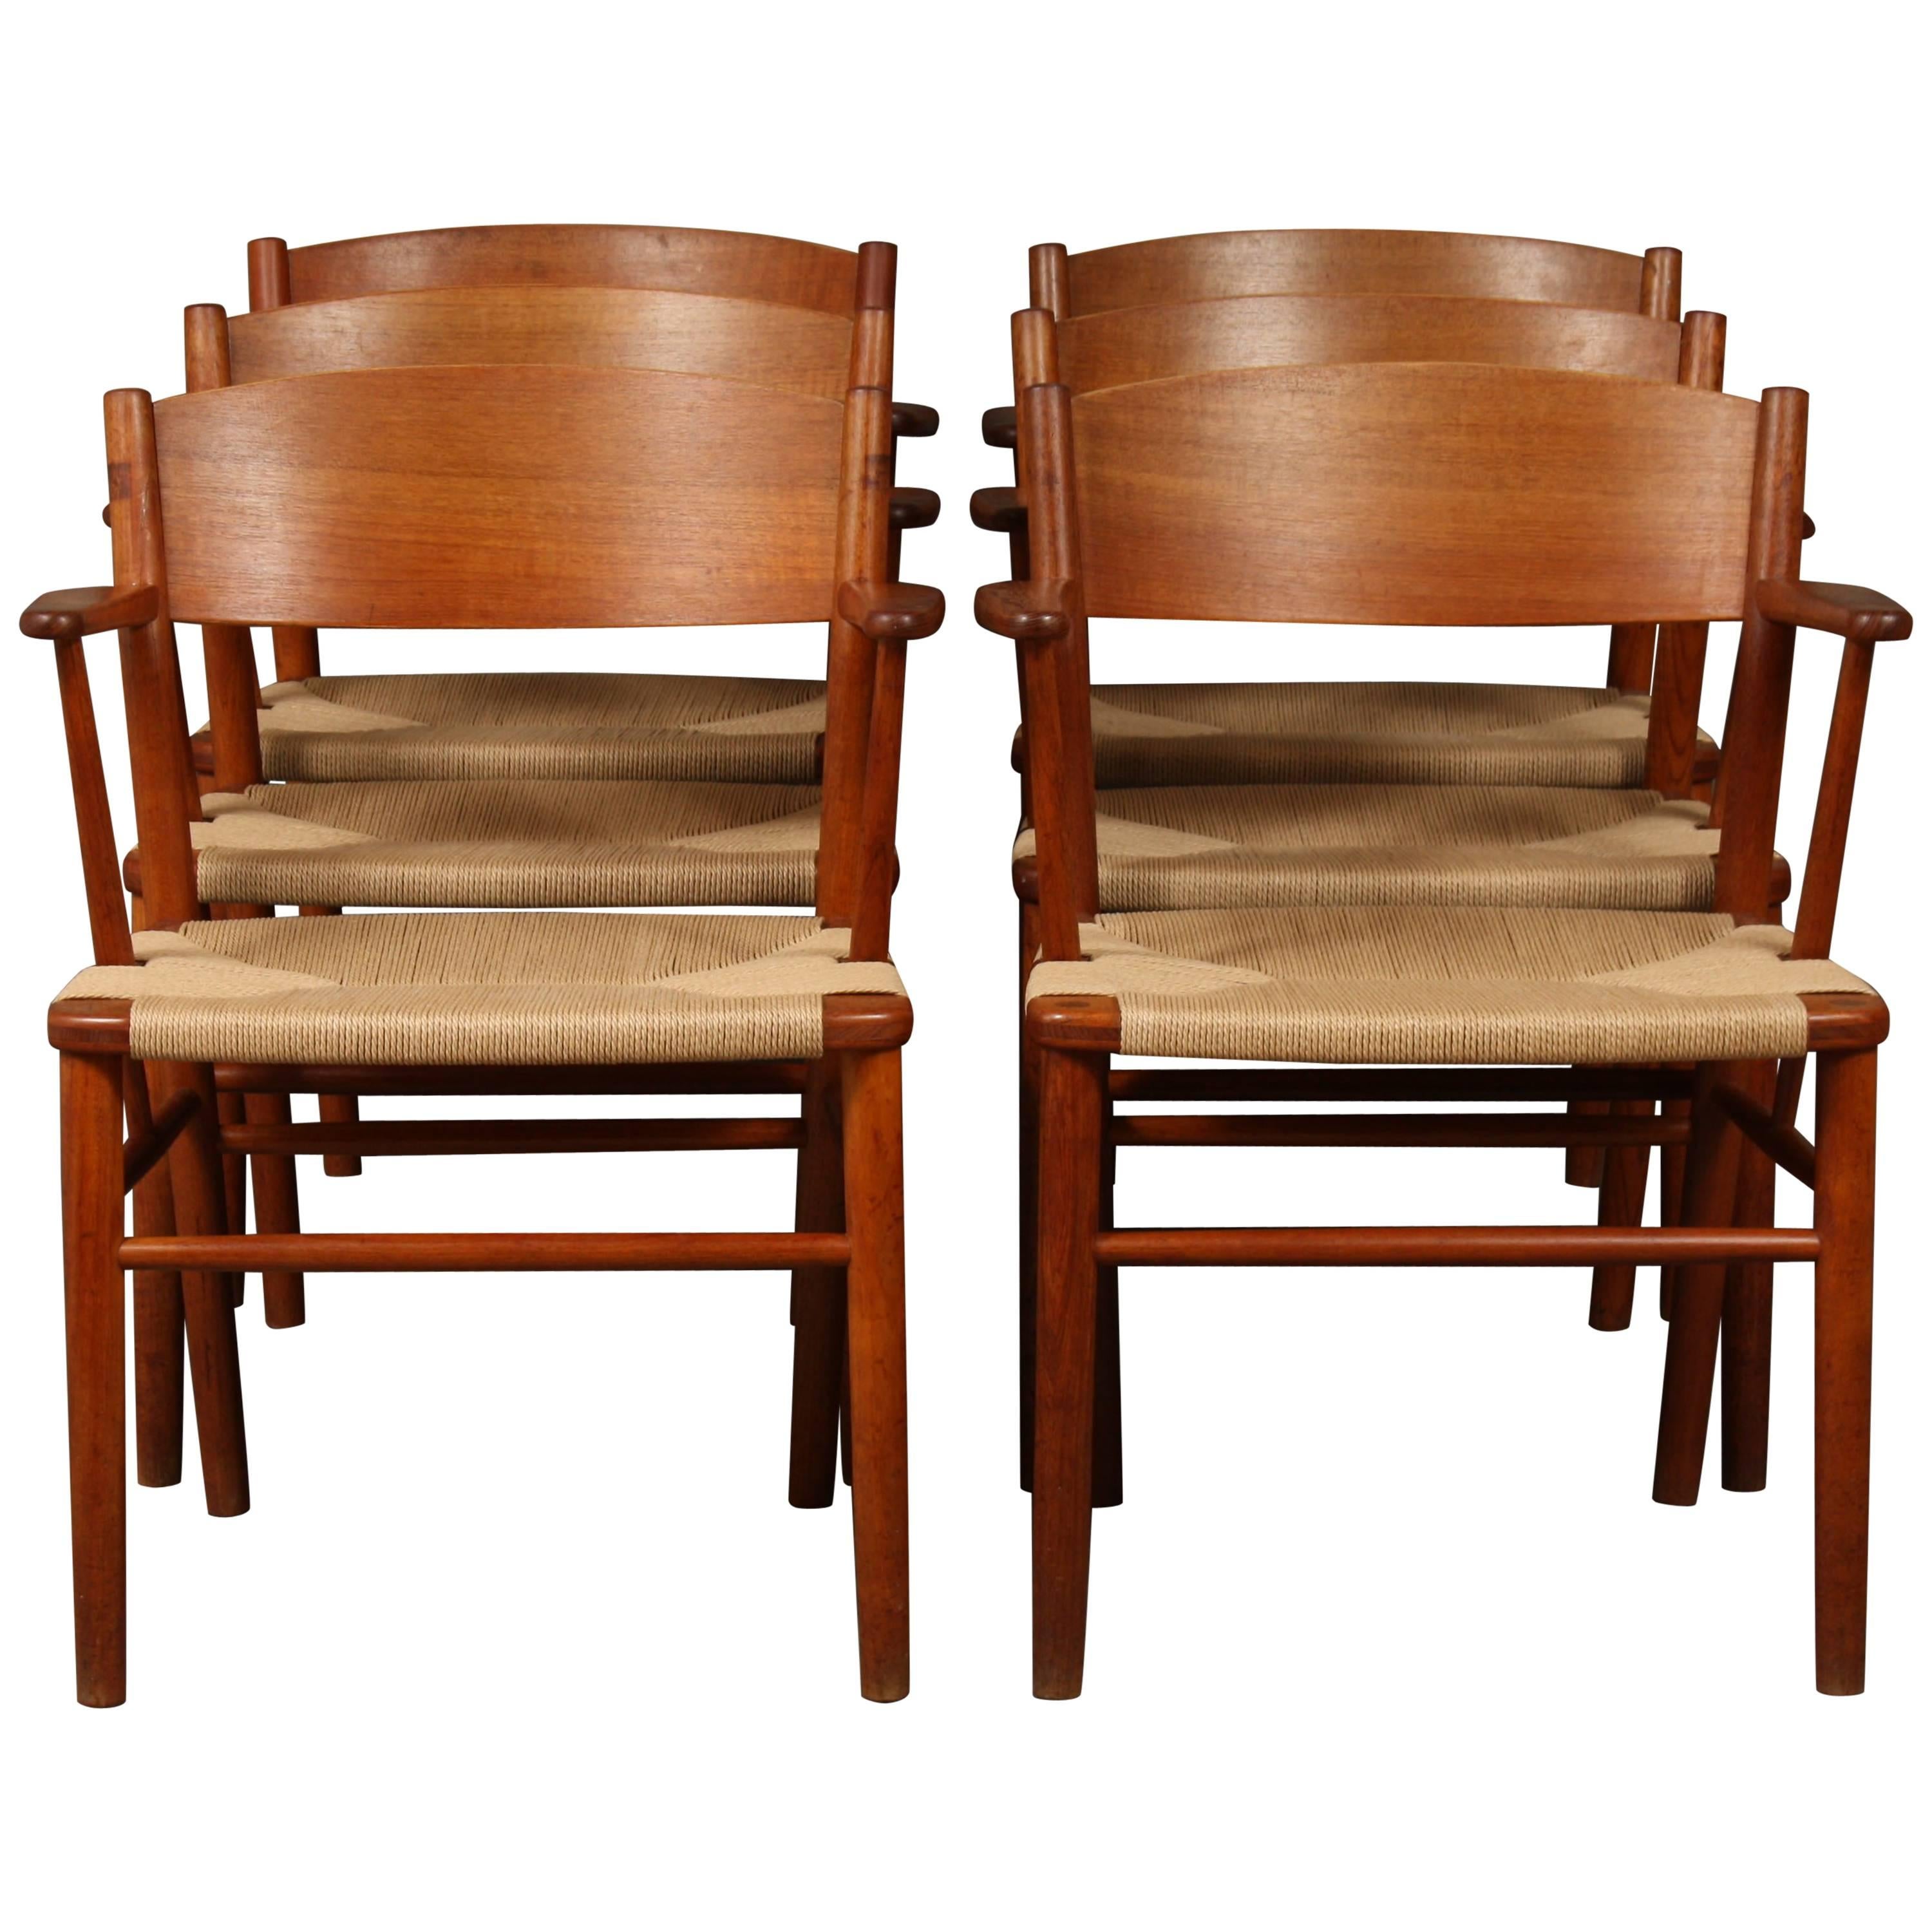 Børge Mogensen Model 538 Dining Chair Teak, Restored with New Woven Seats